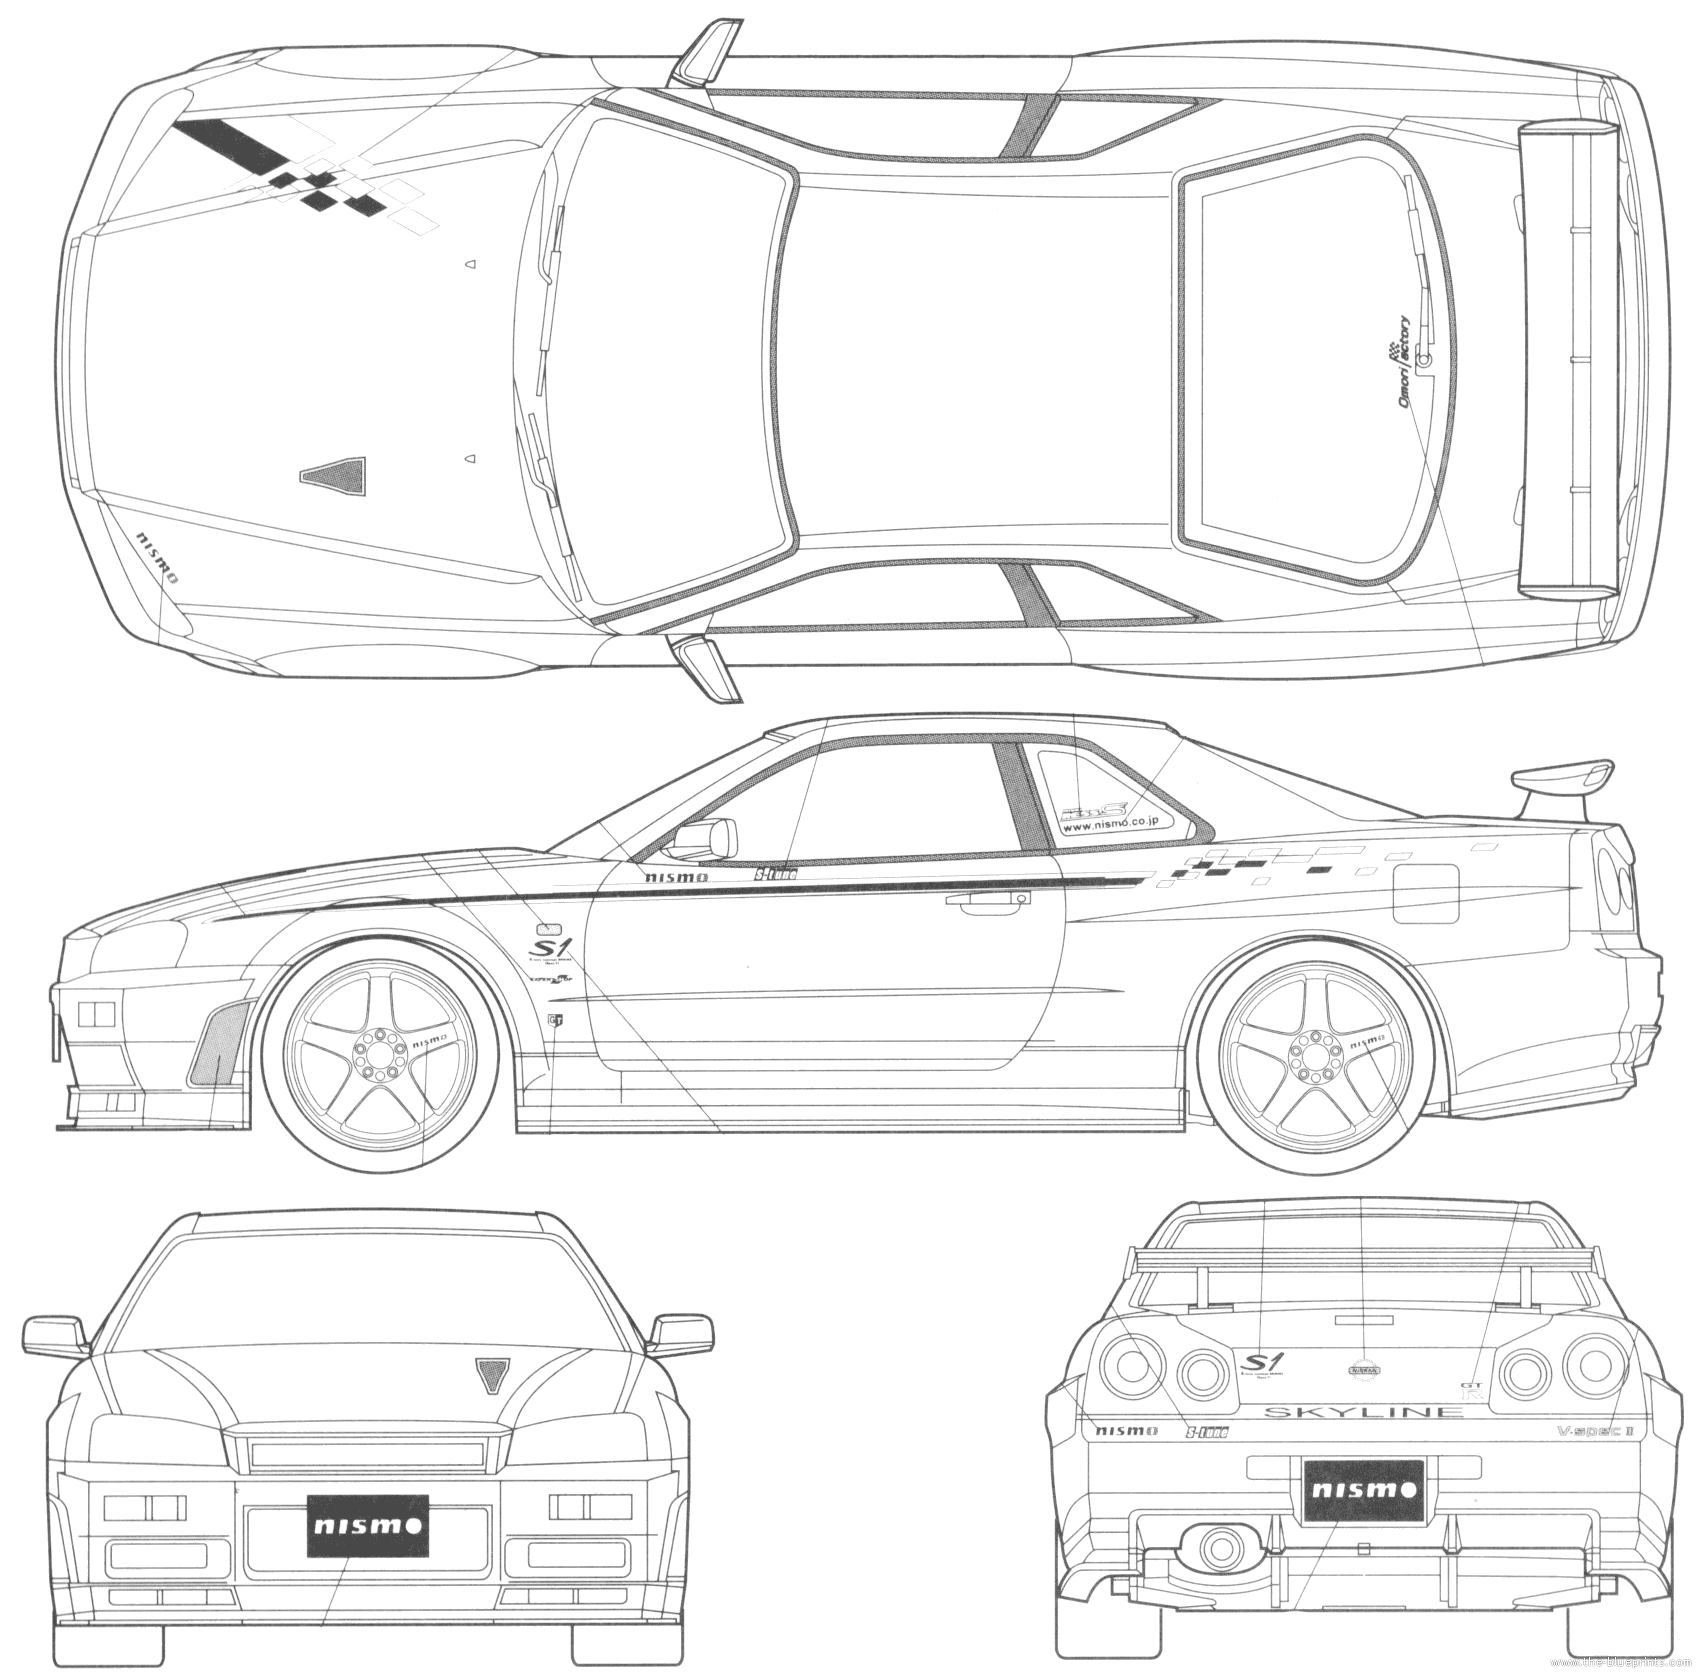 Nissan skyline r35 blueprint #6